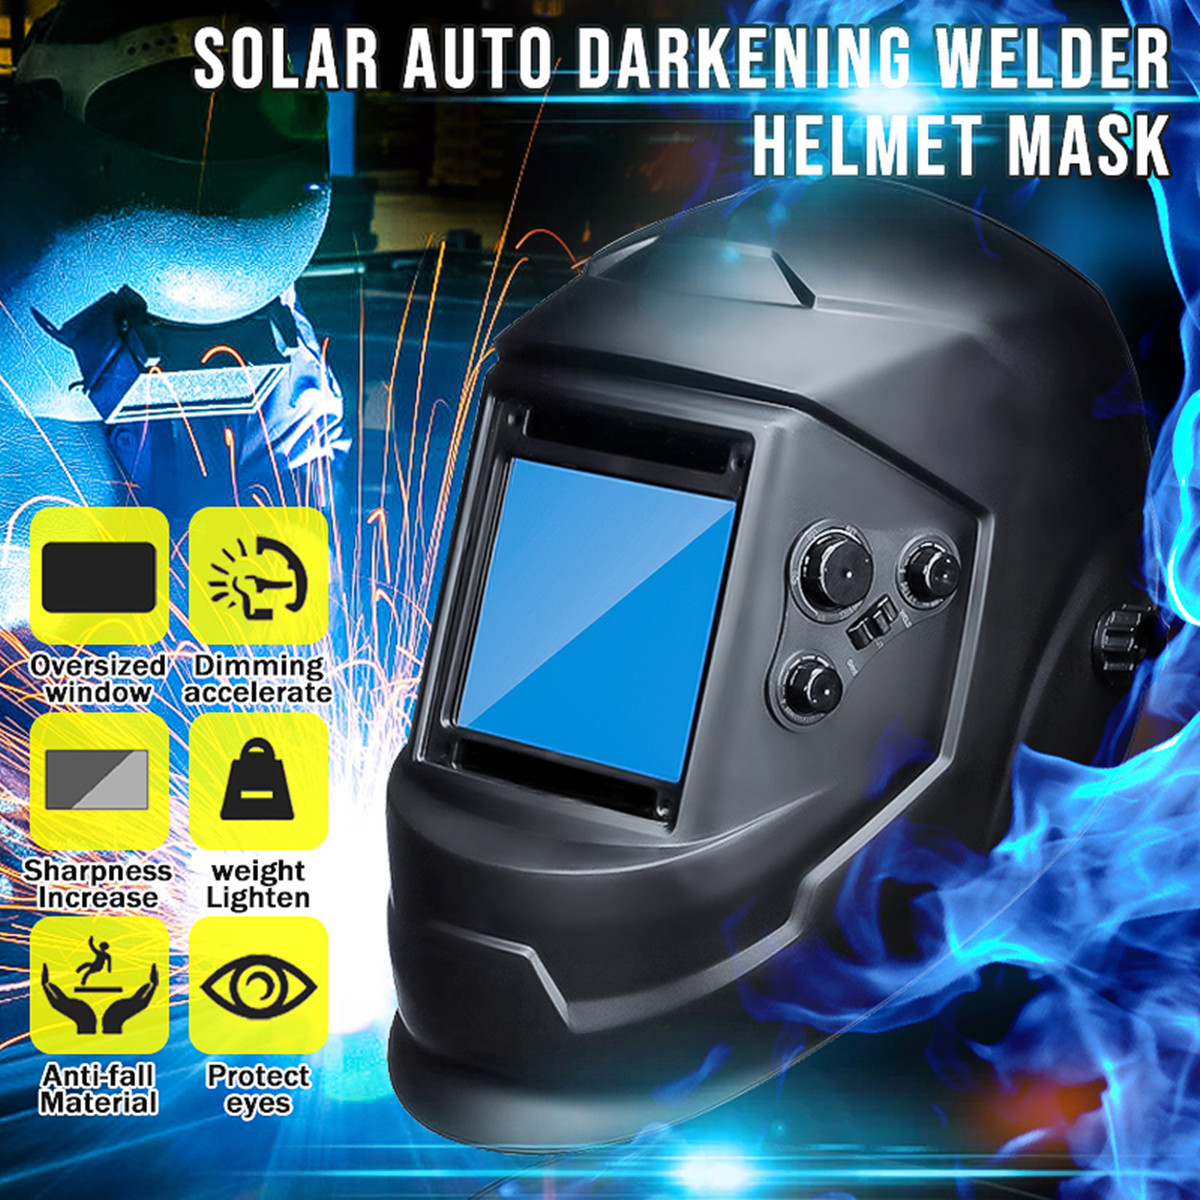 Solar-Energy-Automatic-Dimming-Welding-Mask-Auto-Darkening-Welding-Helmet-Big-View-Area-4-Sensors-Ex-1534647-9